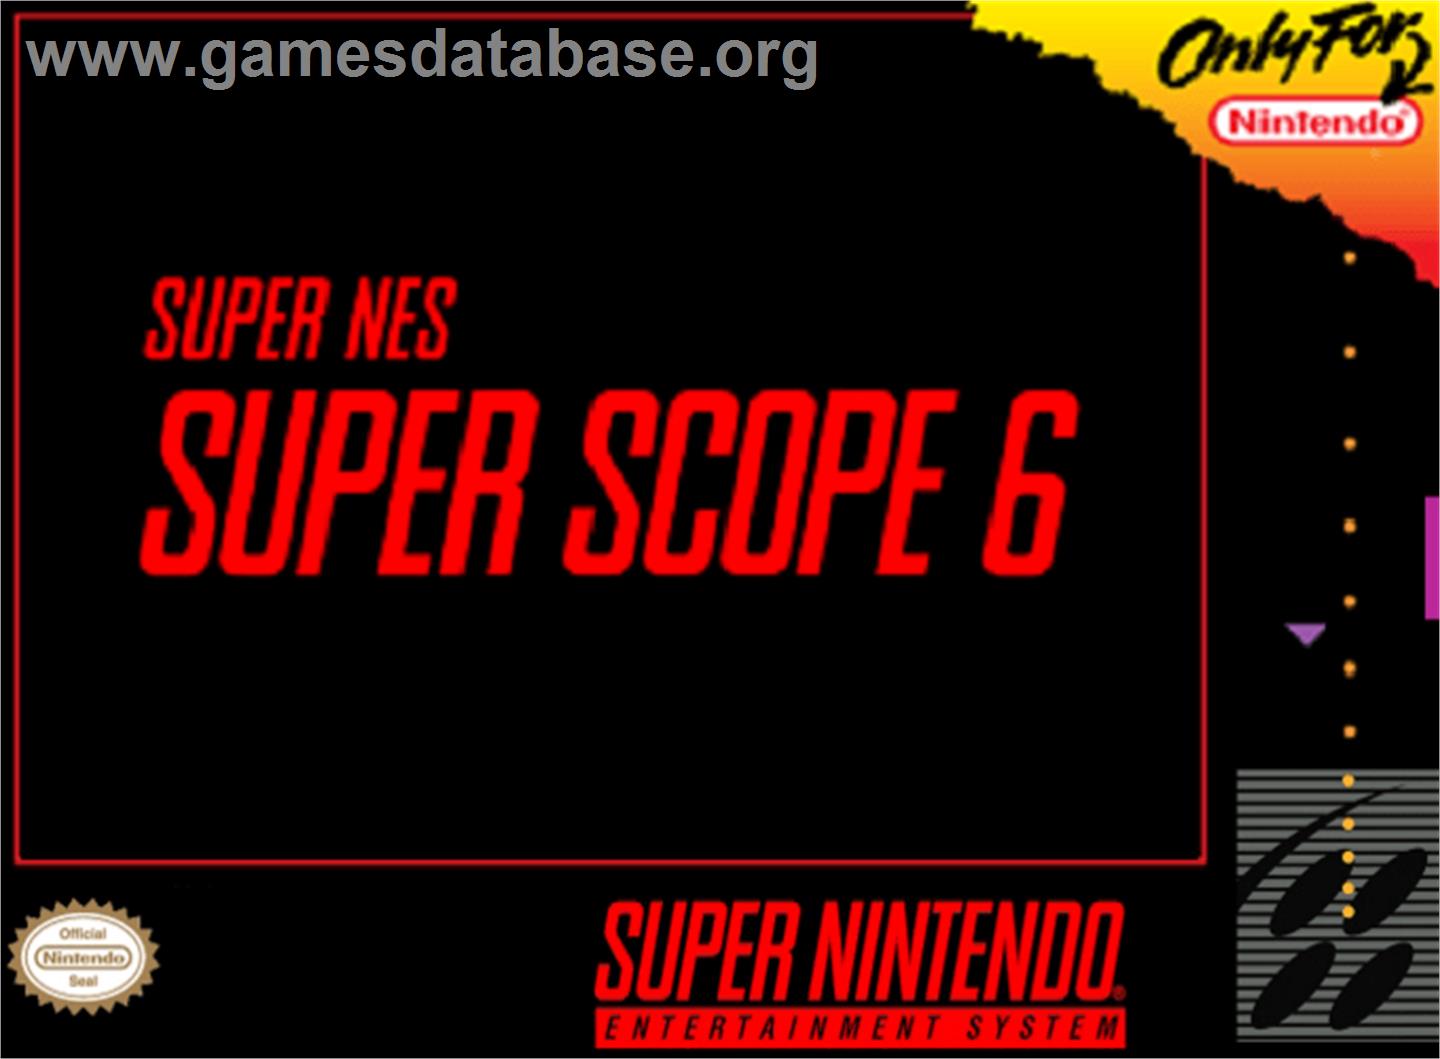 Super Scope 6 - Nintendo SNES - Artwork - Box